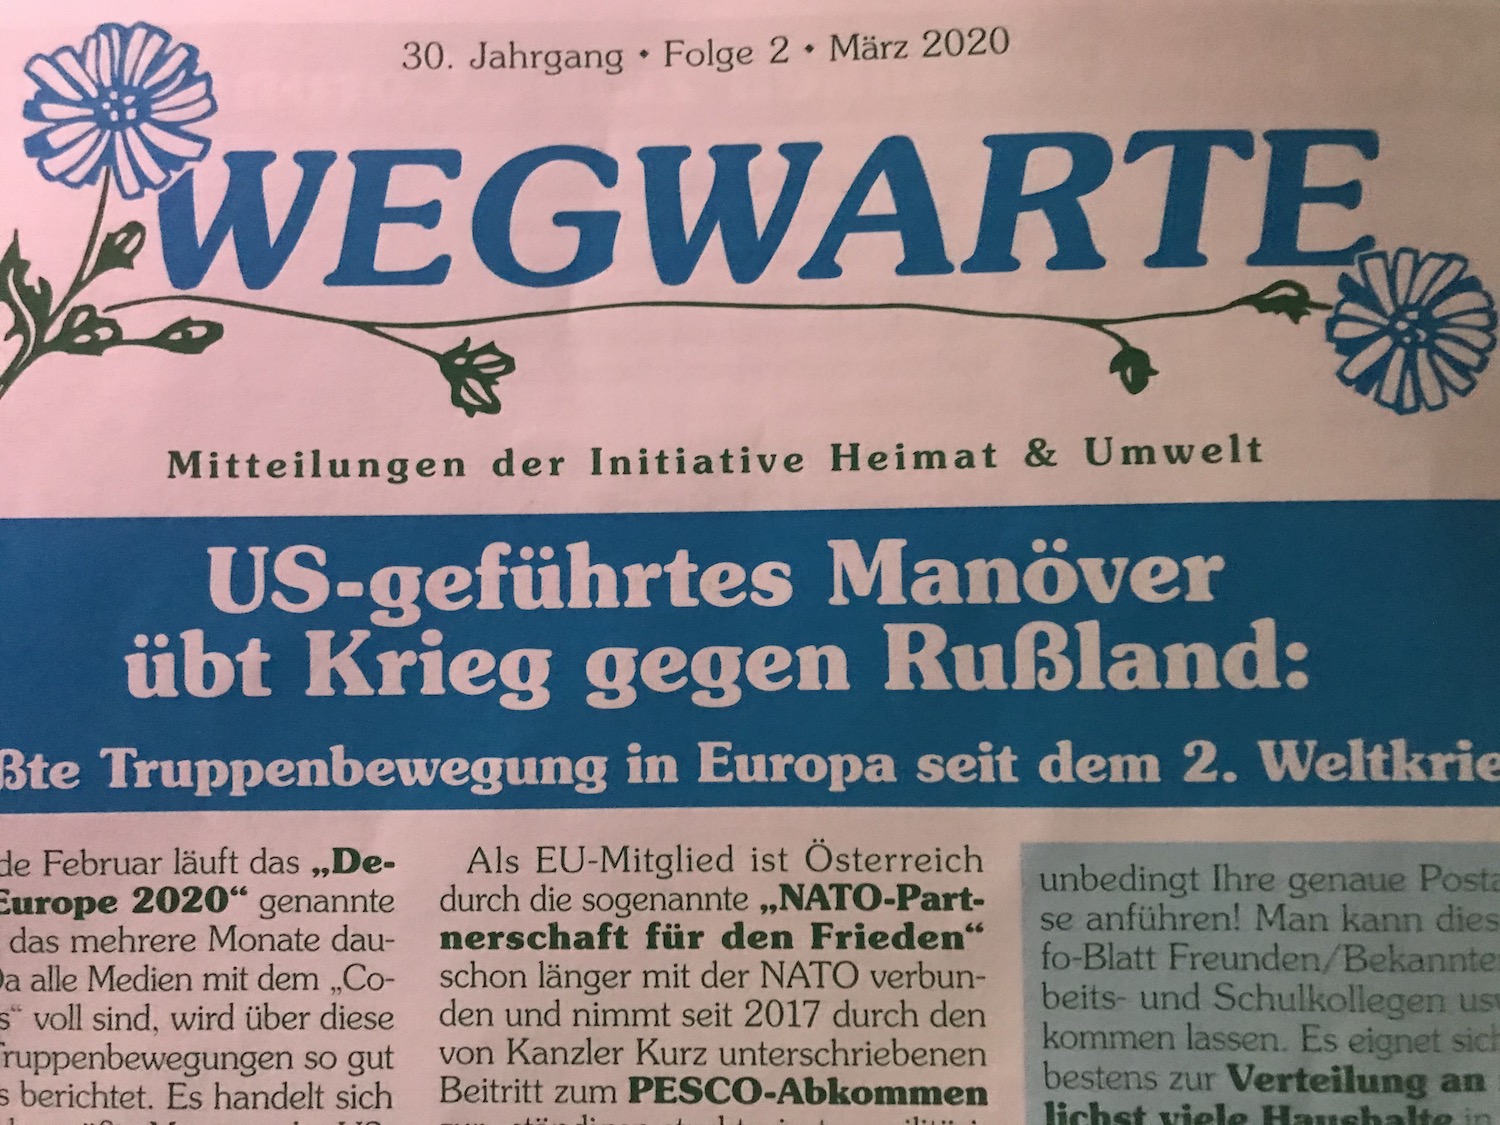 Cover "Wegwarte" März 2020